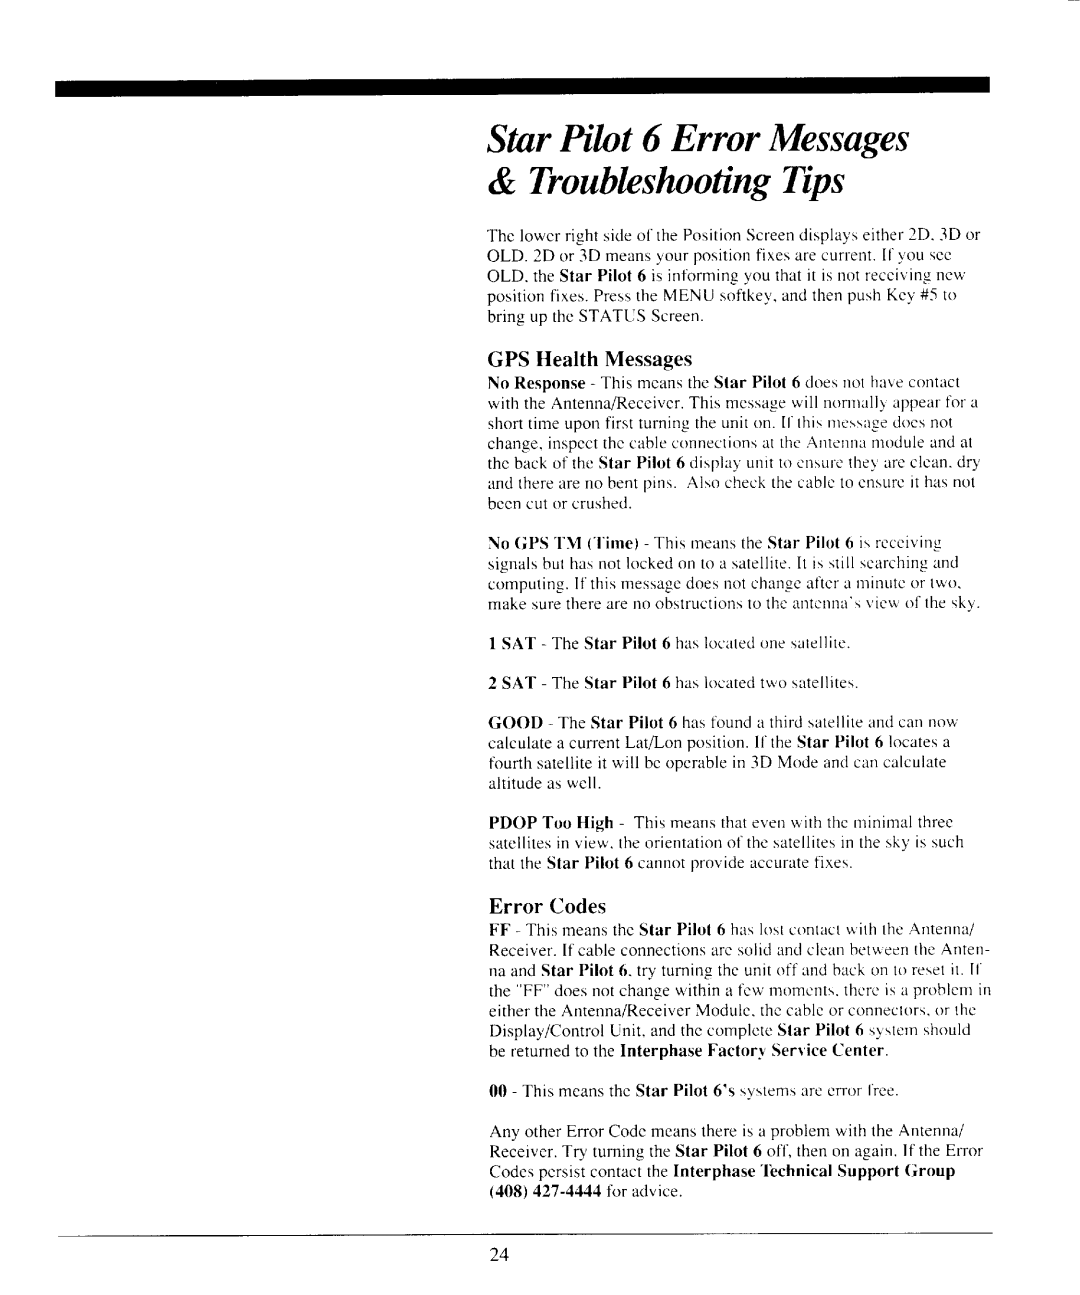 Interphase Tech Star Pilot 6 manual Snr Pilot 6 Error Messages & TroublcslnotingTips, GPS Health Messages, Error Codes 